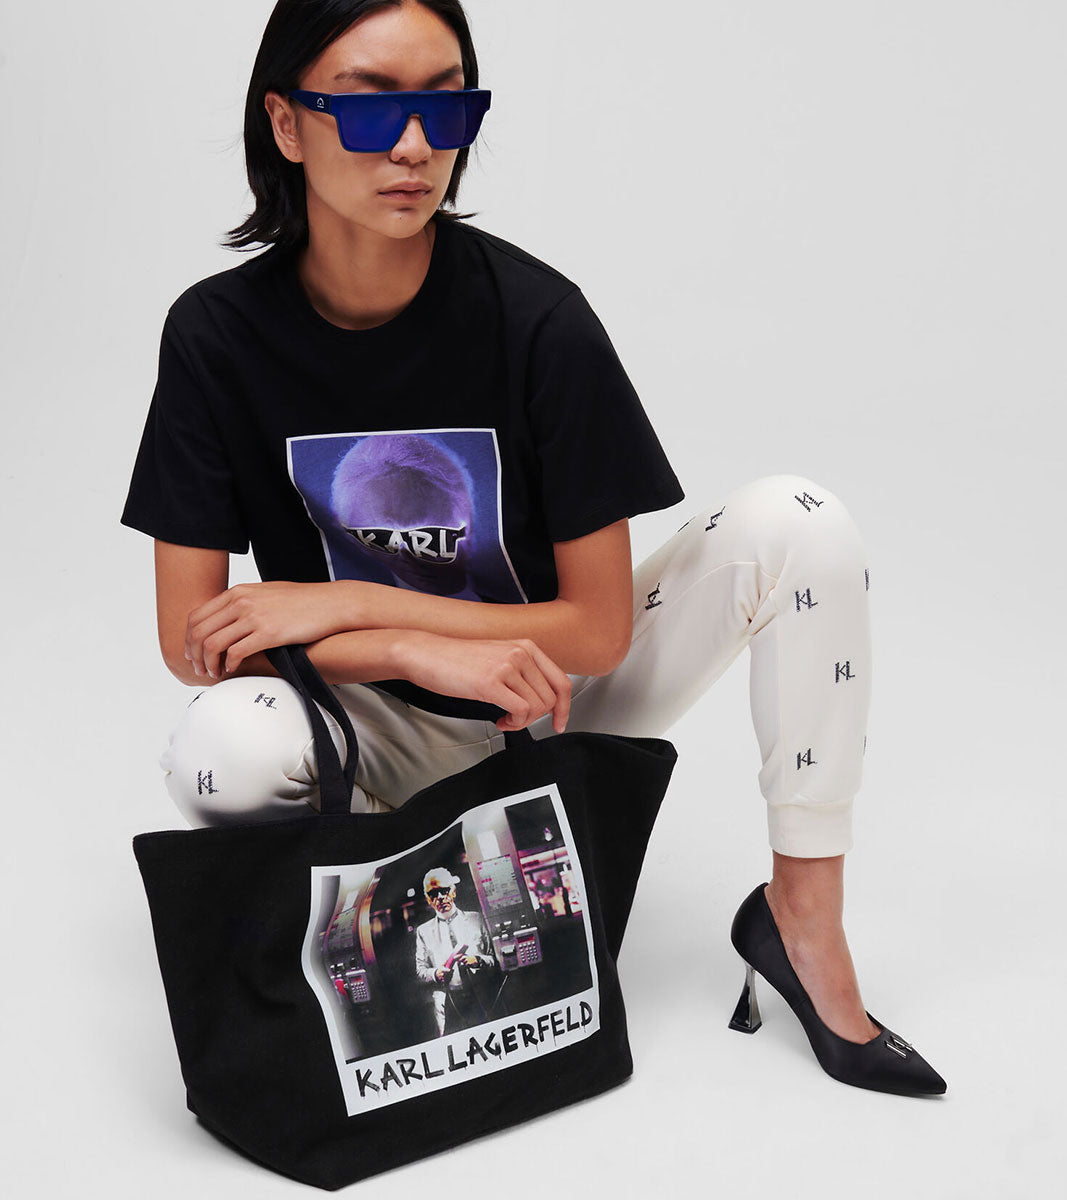 Handbags Karl Lagerfeld, Style code: 226w3107-a994